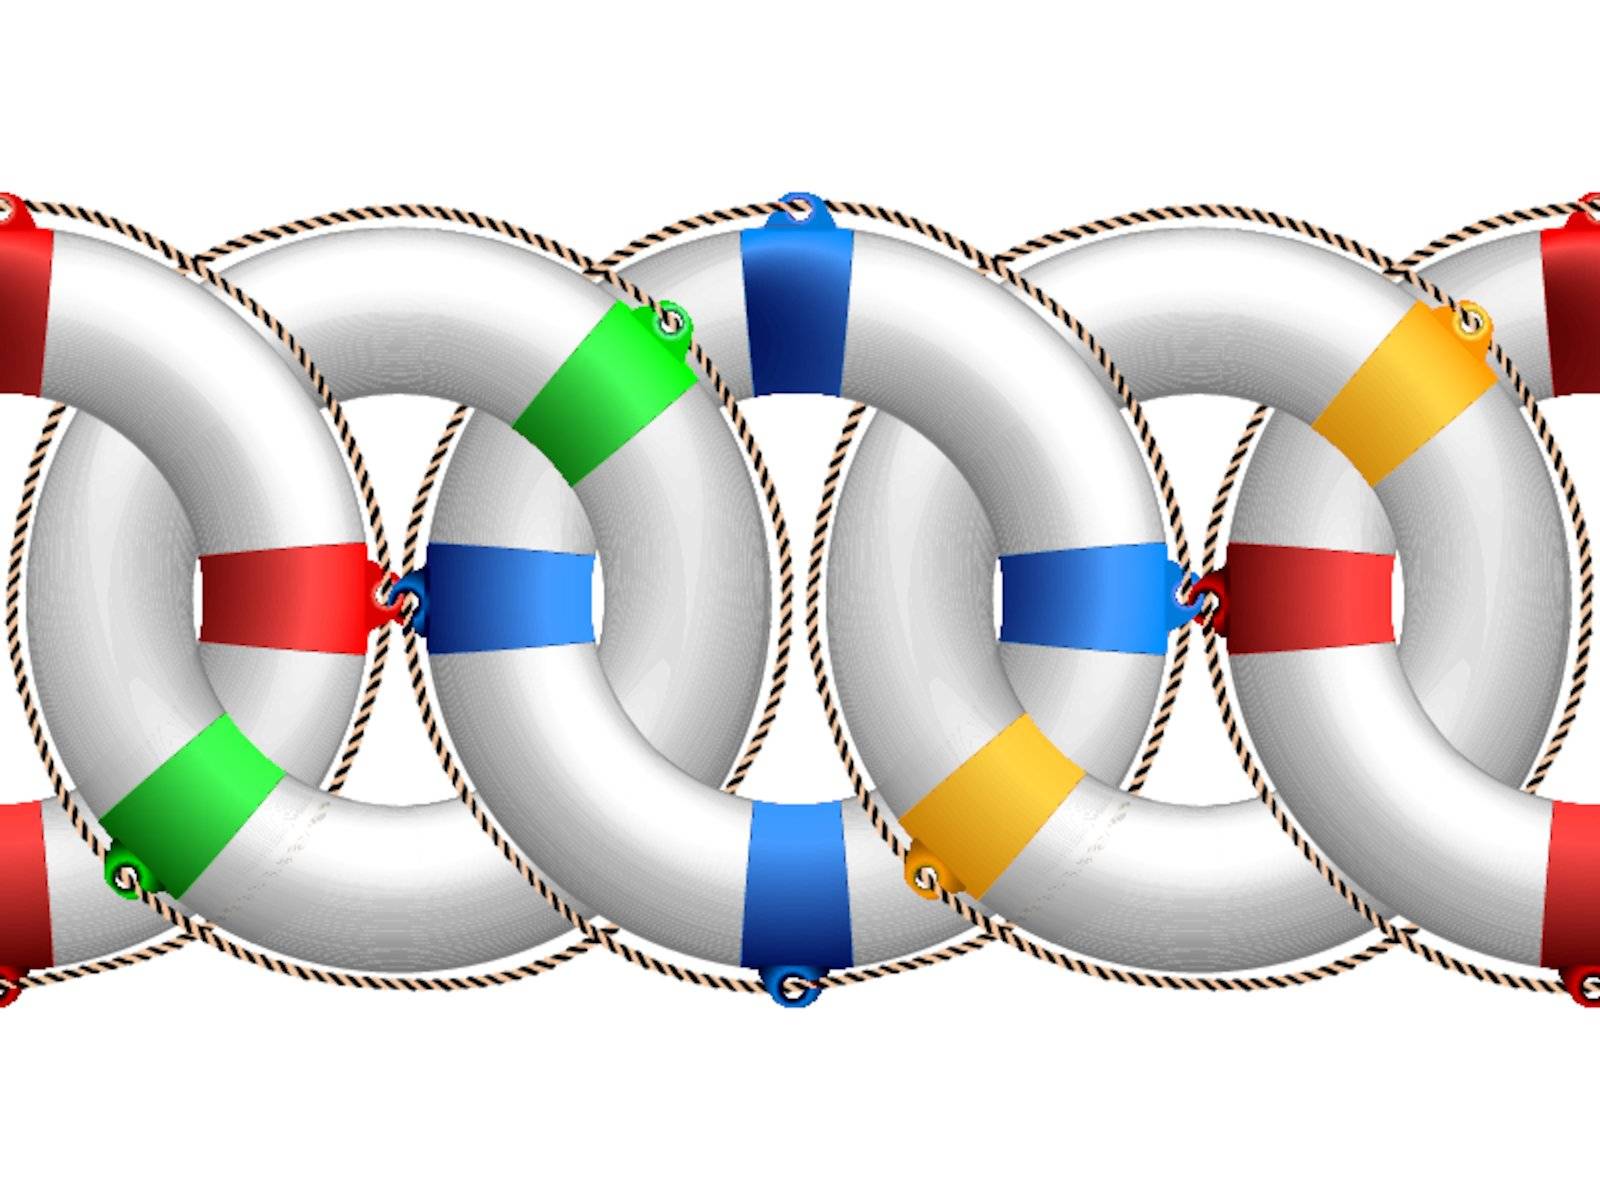 life buoy horizontal pattern, abstract seamless border; vector art illustration